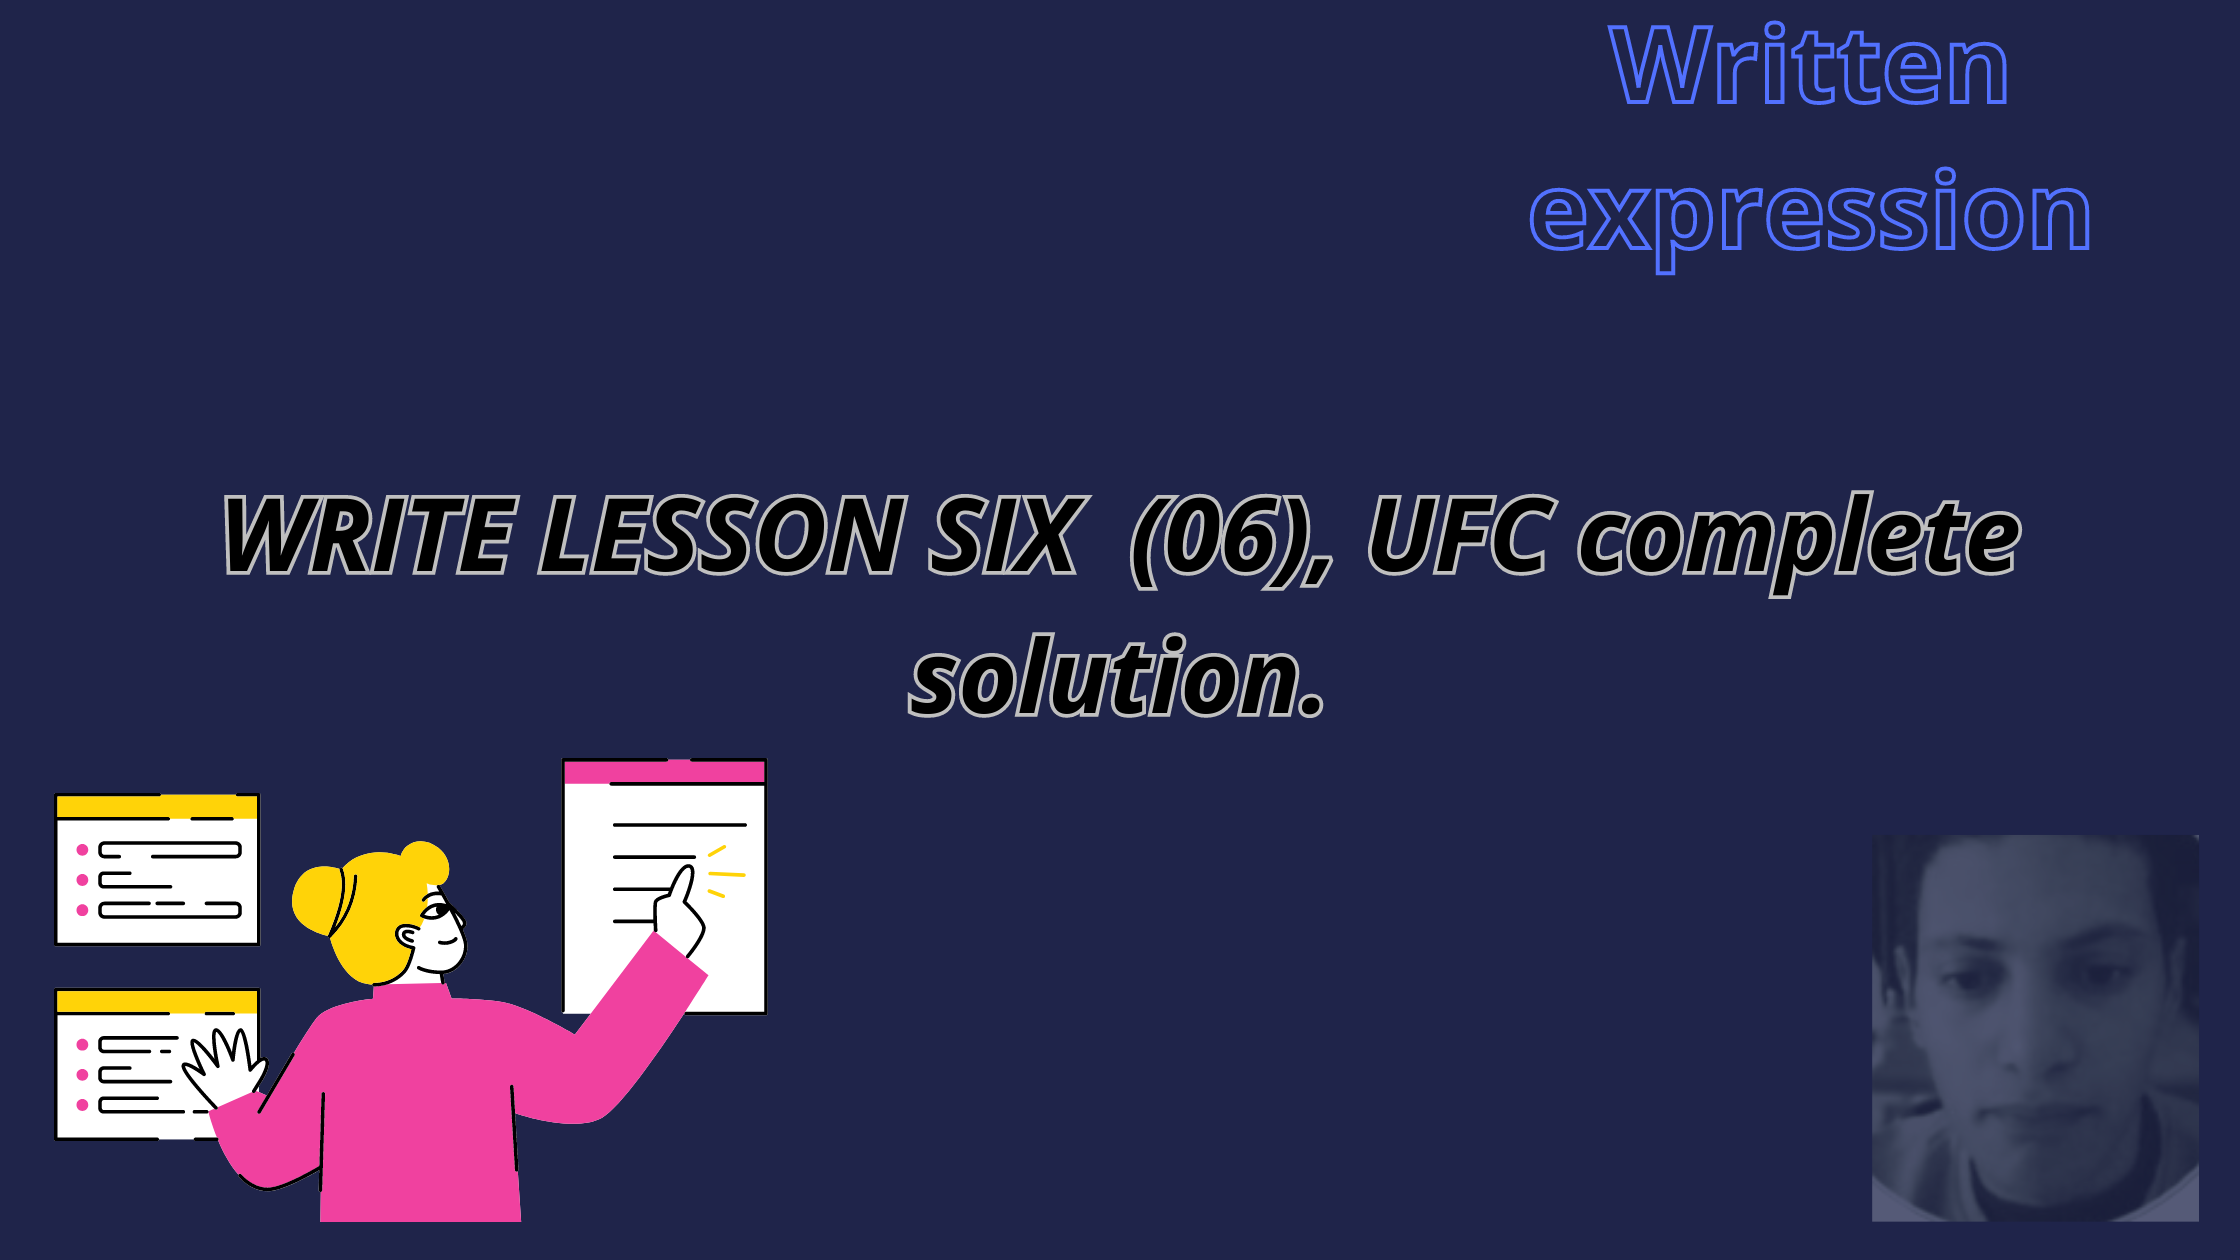 WRITE LESSON SIX  (06), UFC complete solution.